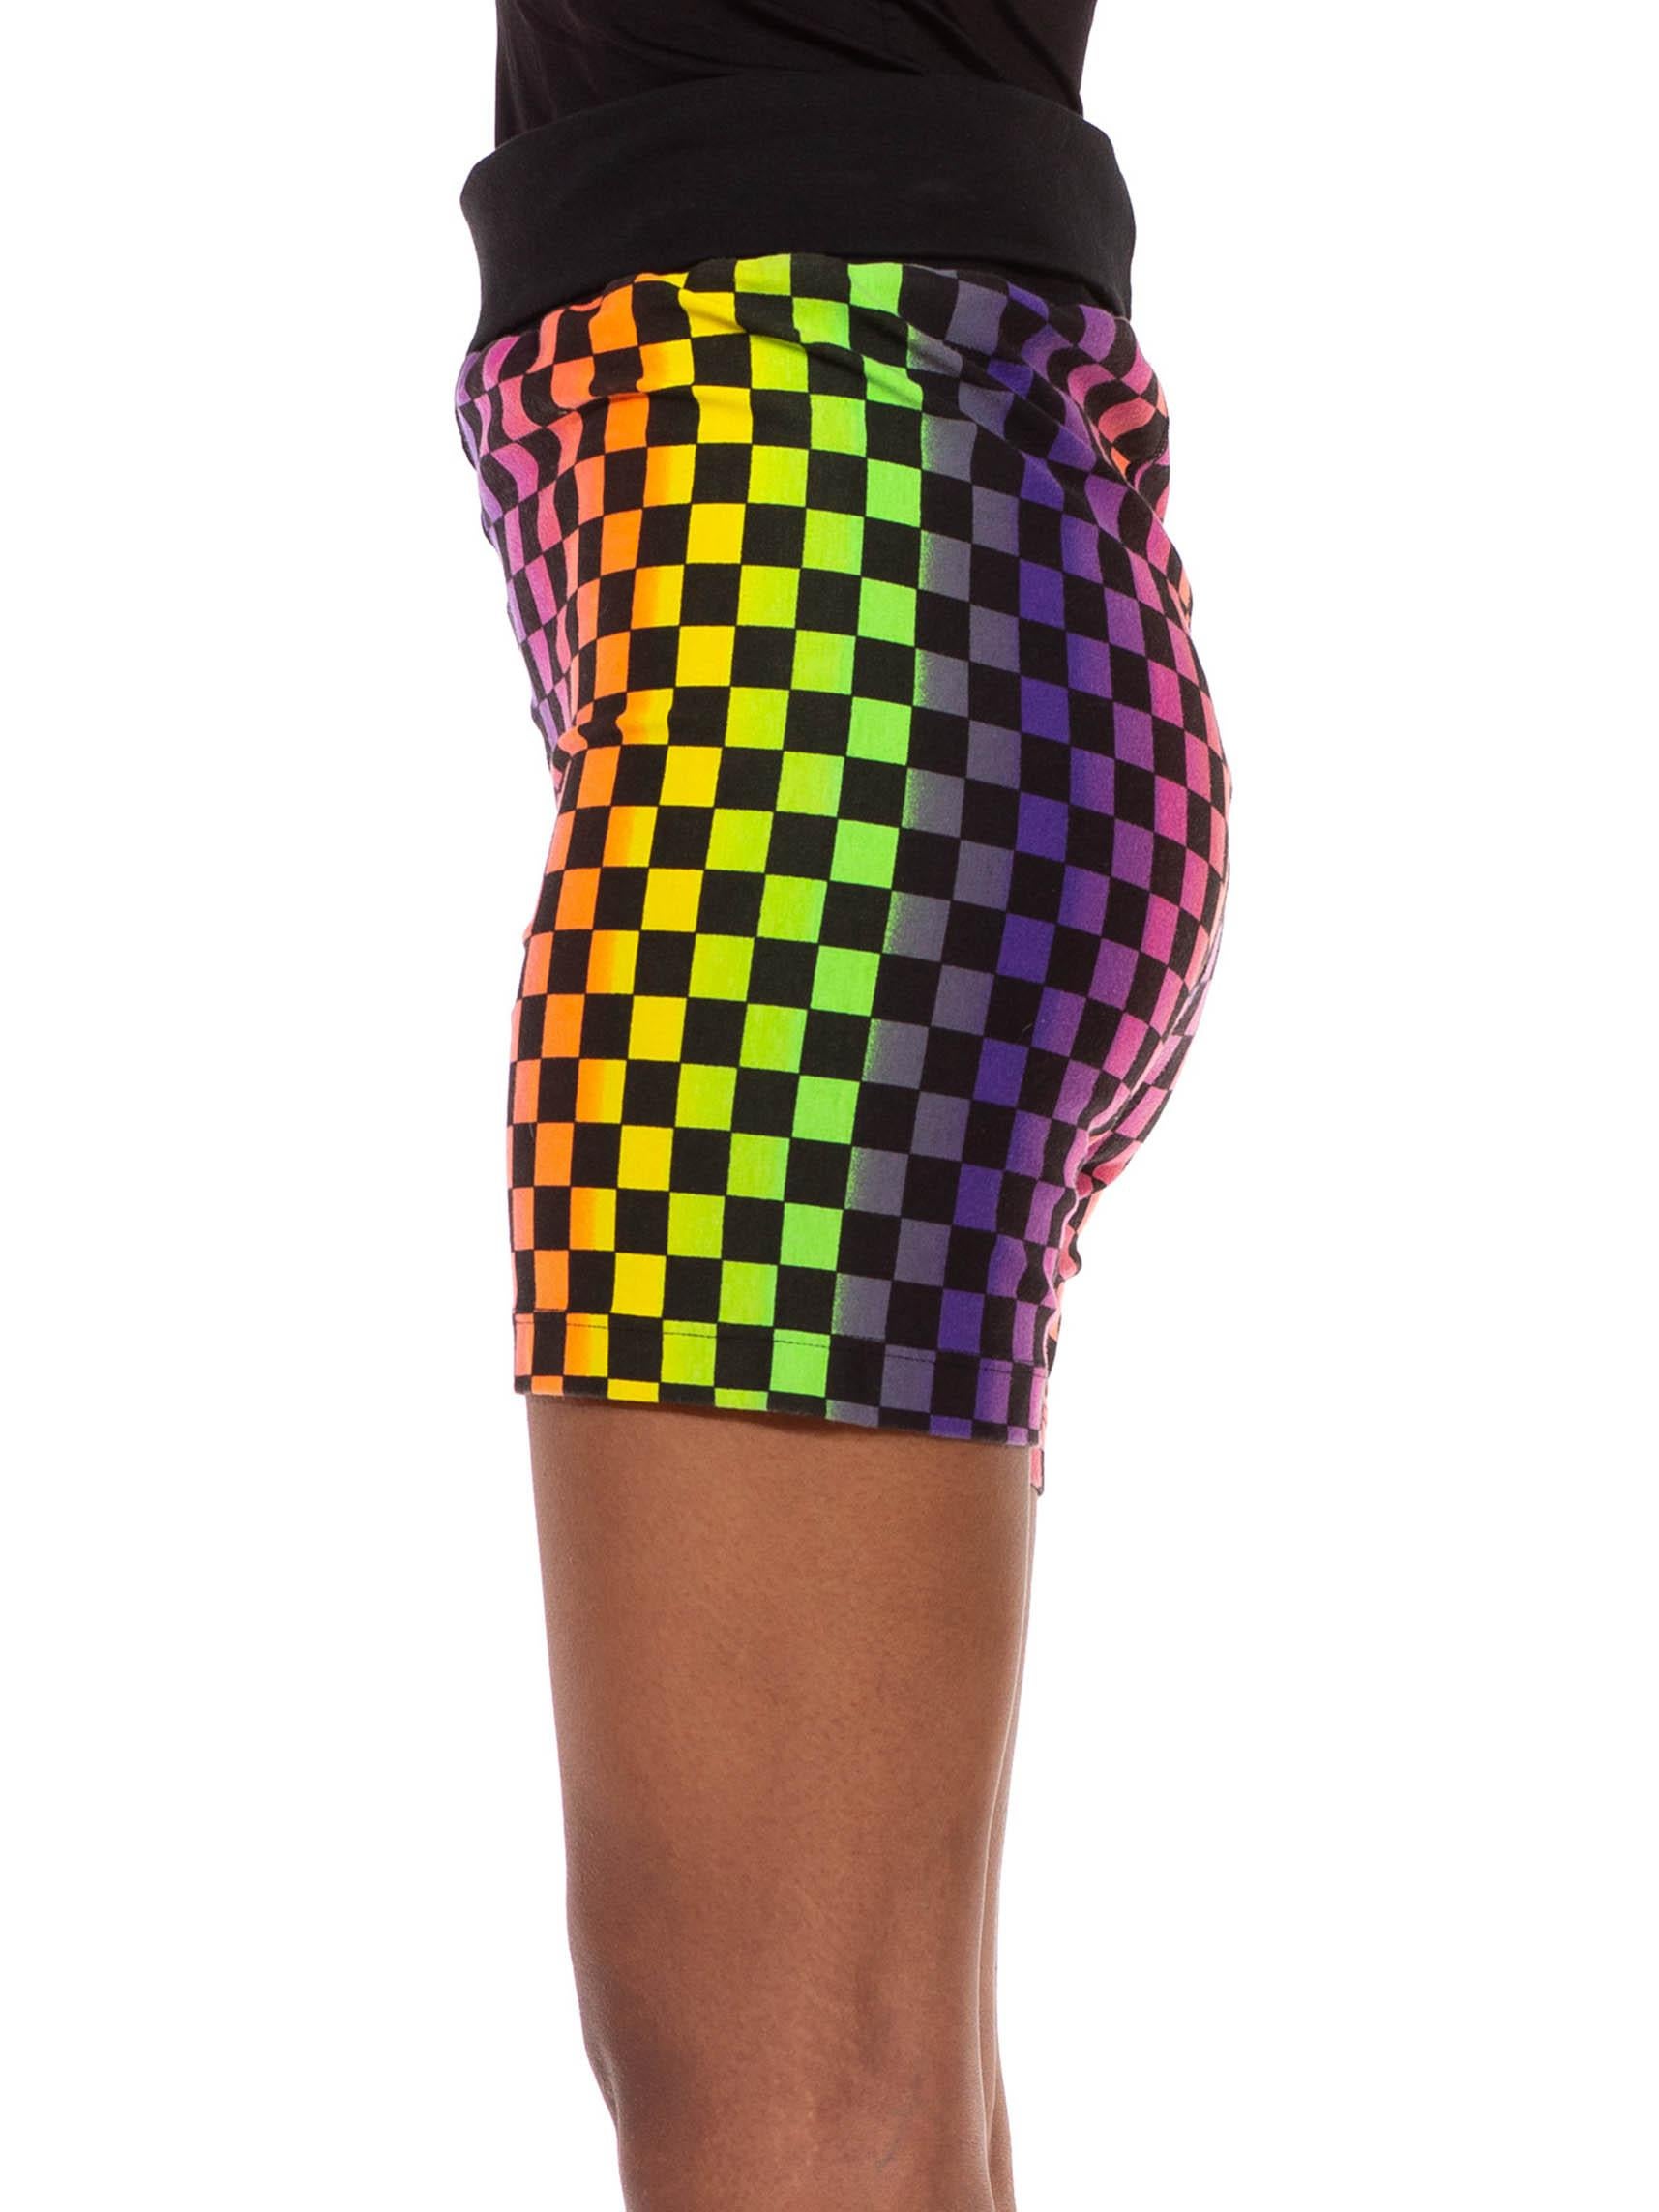 rainbow checkered shorts